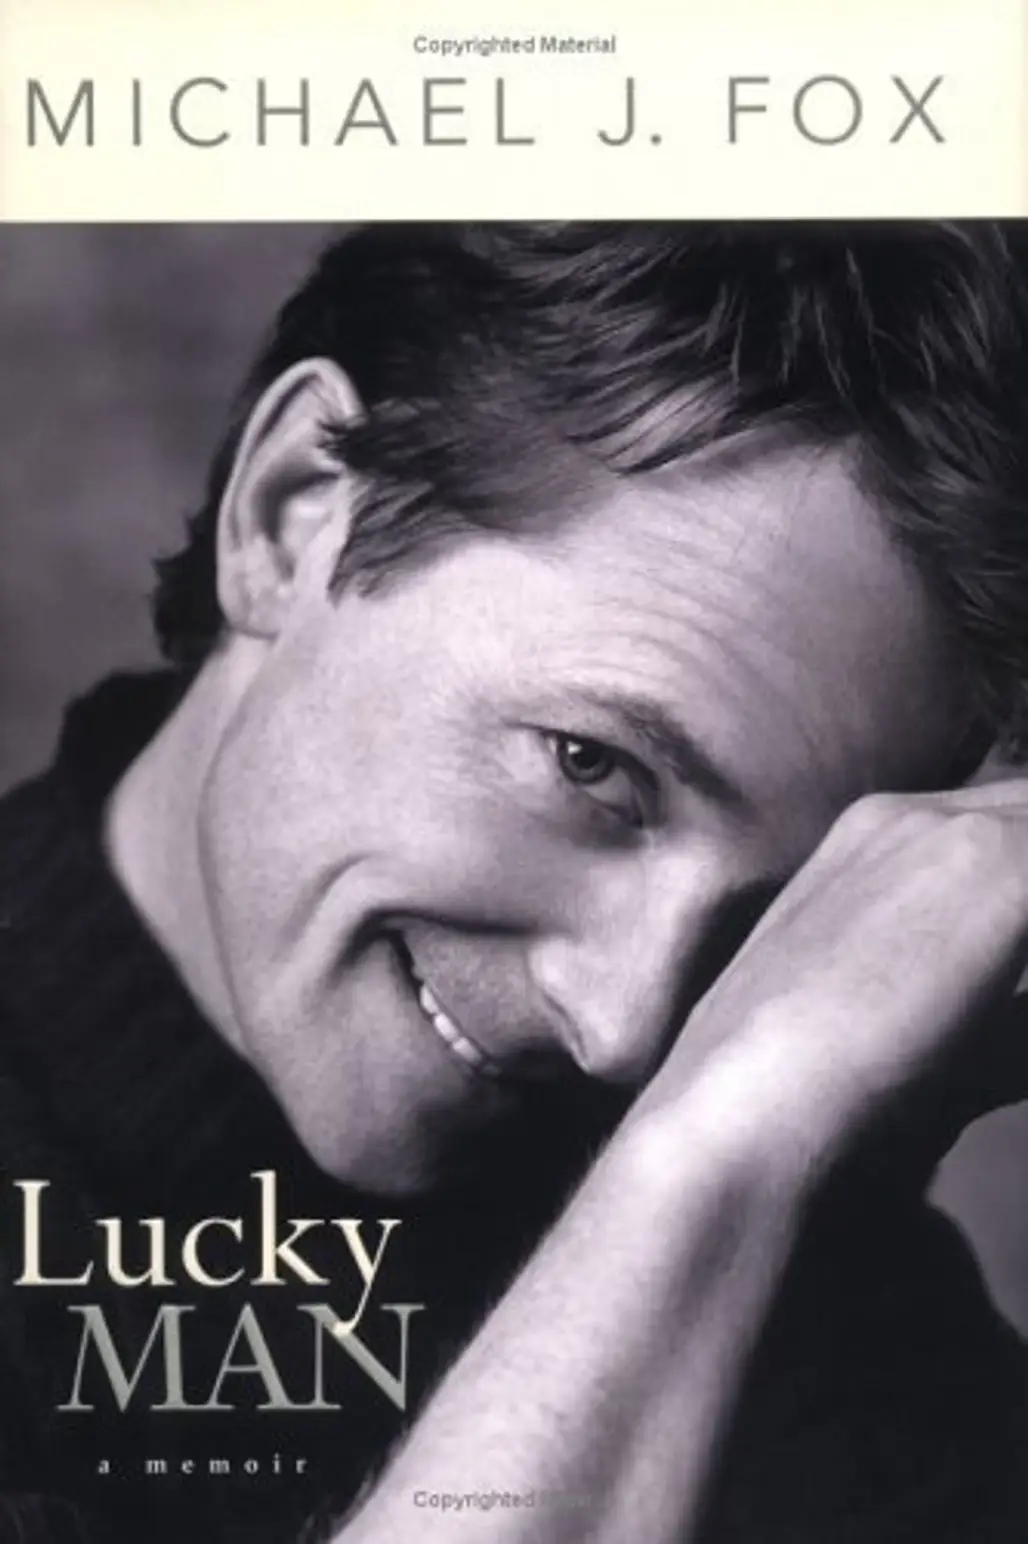 “Luck Man” by Michael J. Fox